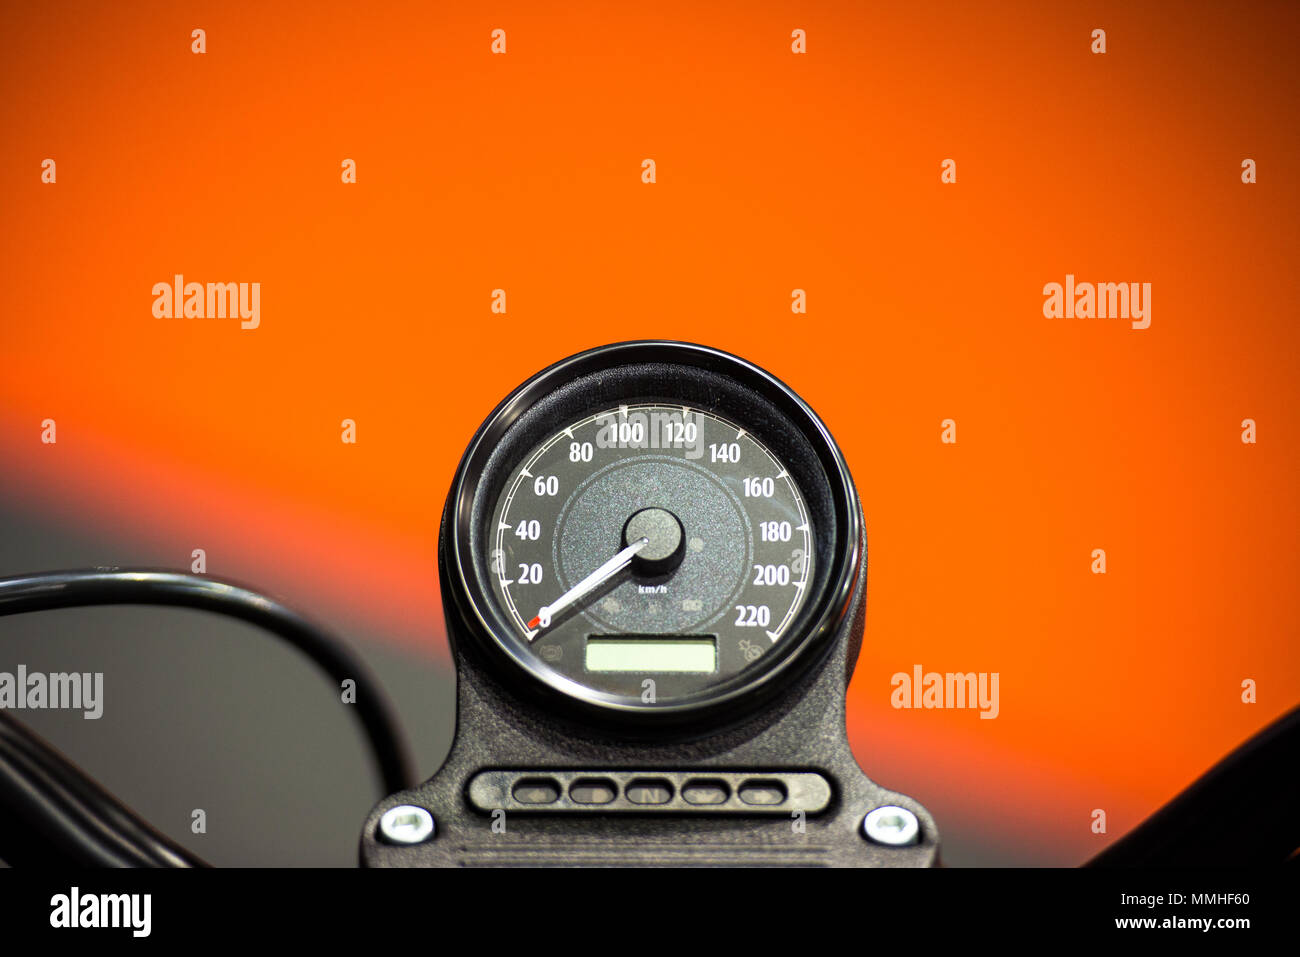 Motorrad armaturenbrett -Fotos und -Bildmaterial in hoher Auflösung – Alamy